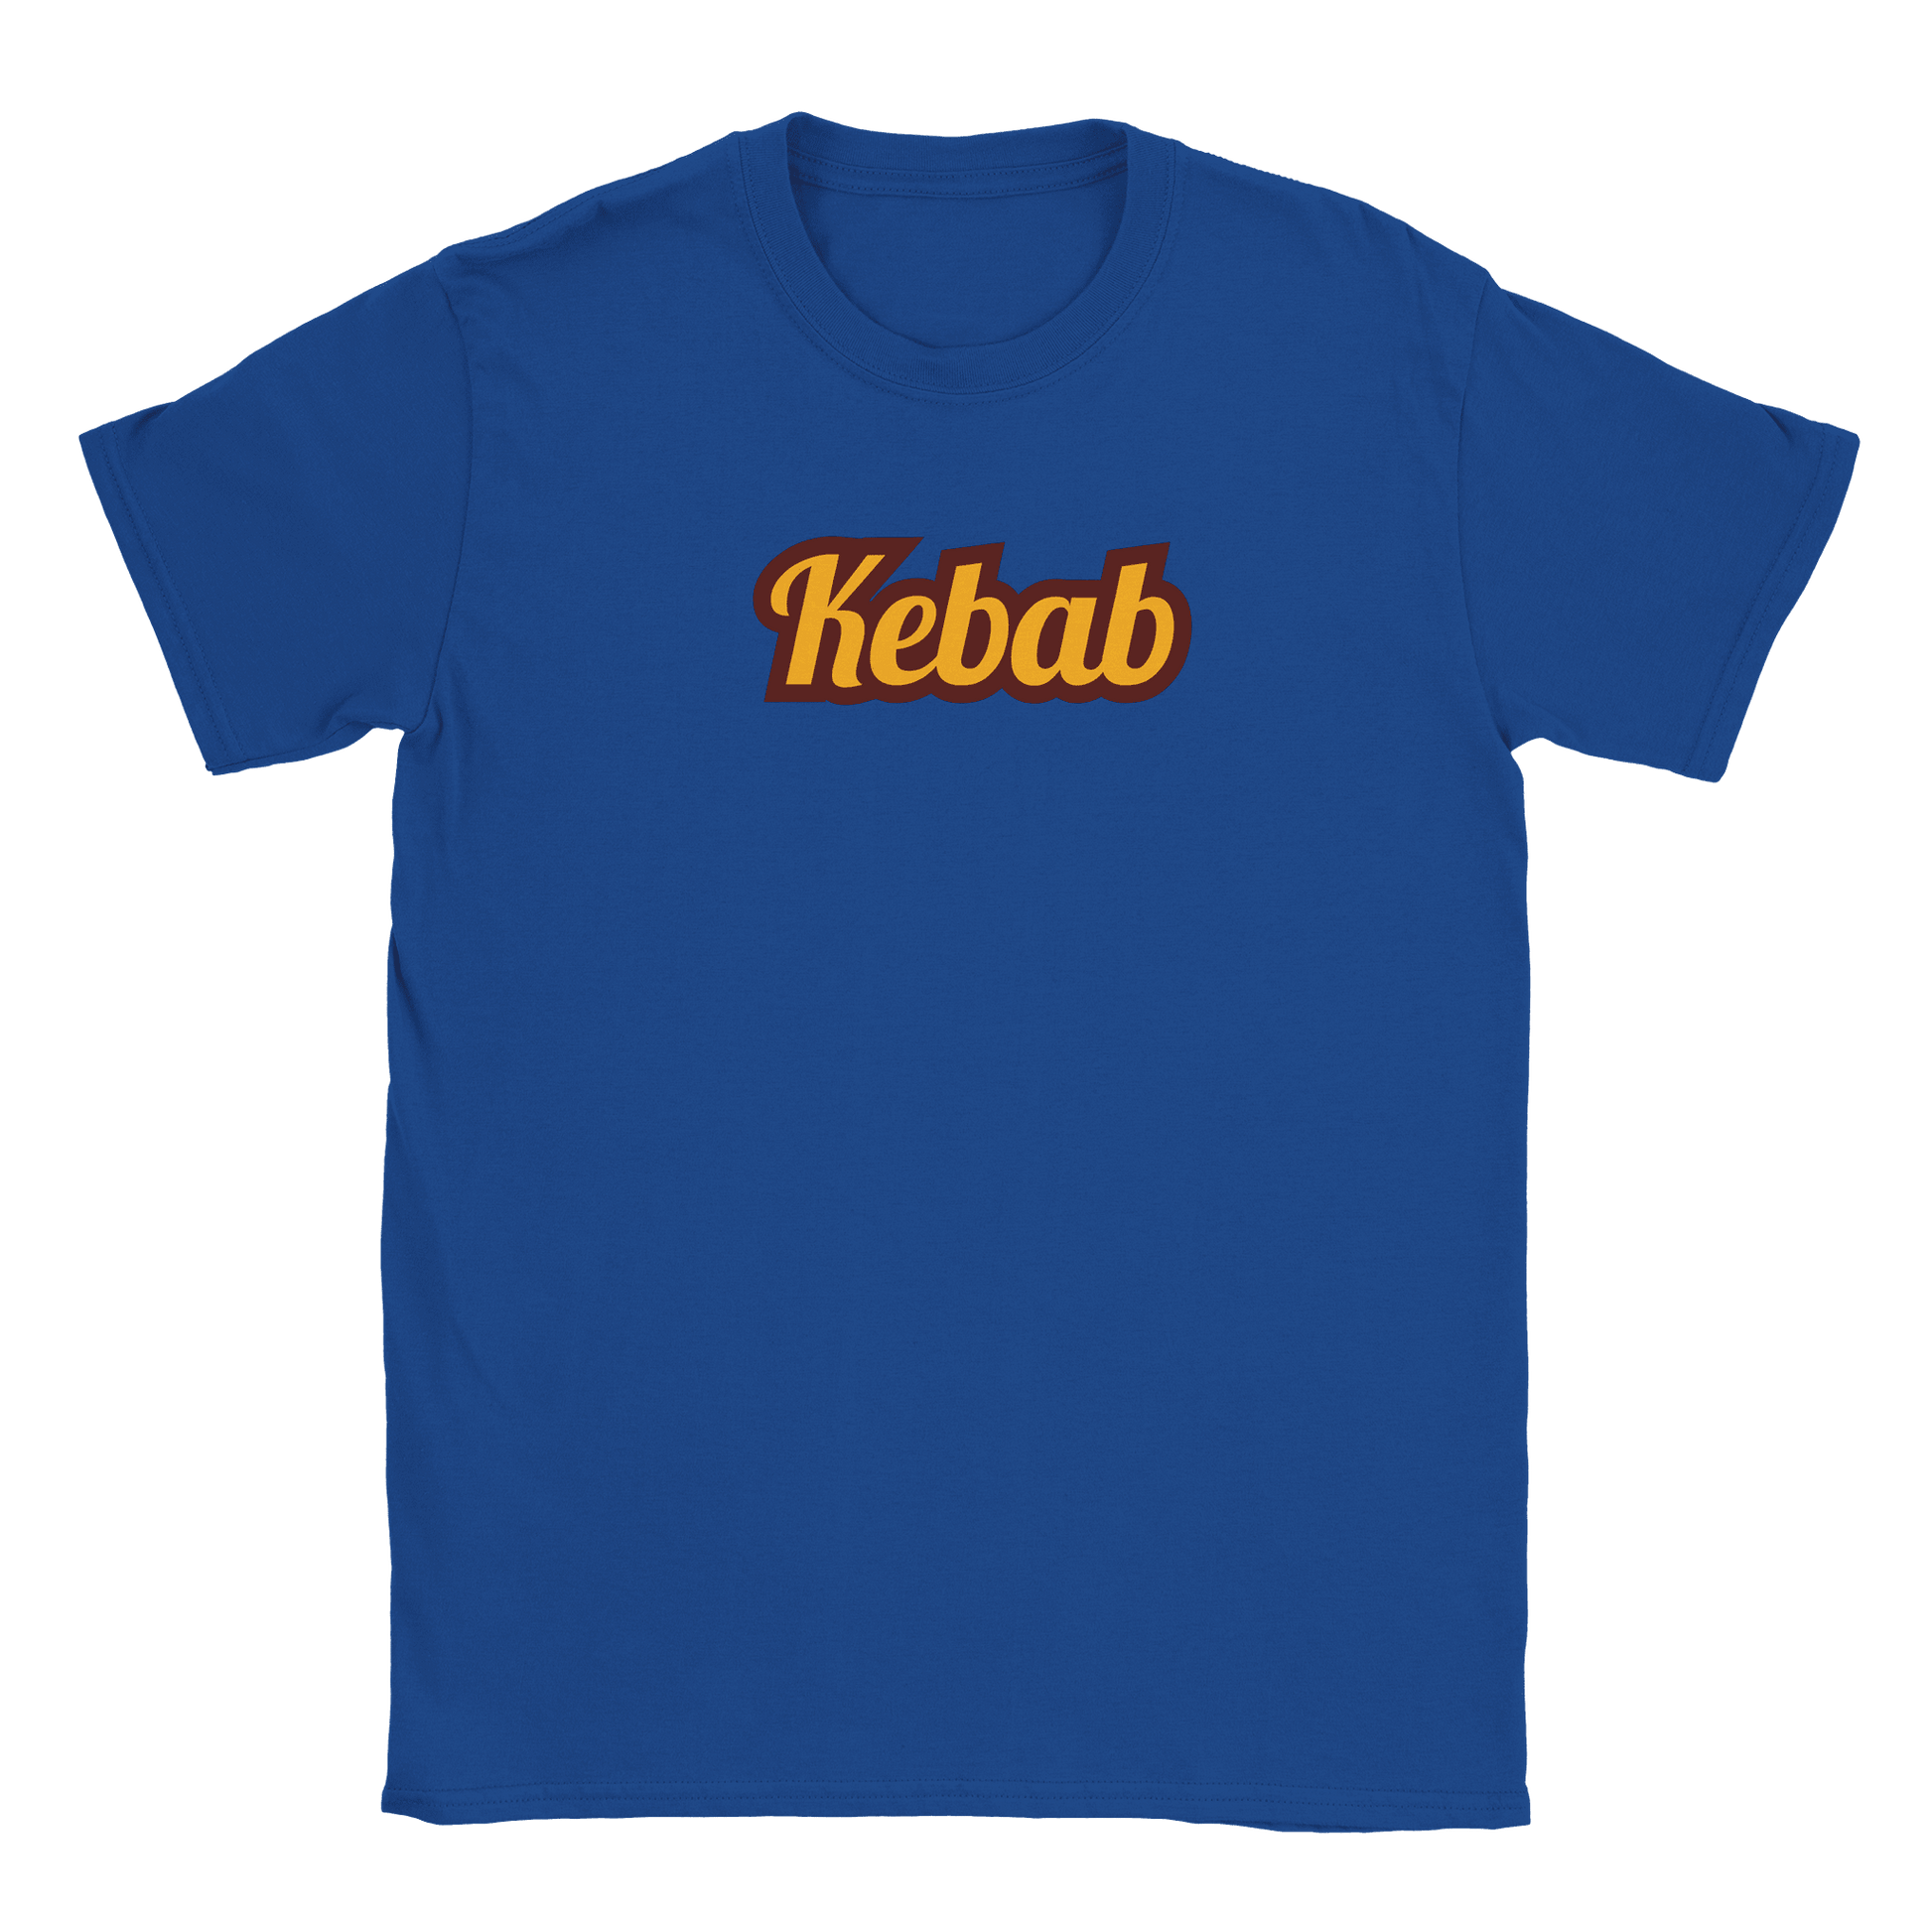 Kebab - T-shirt Blå